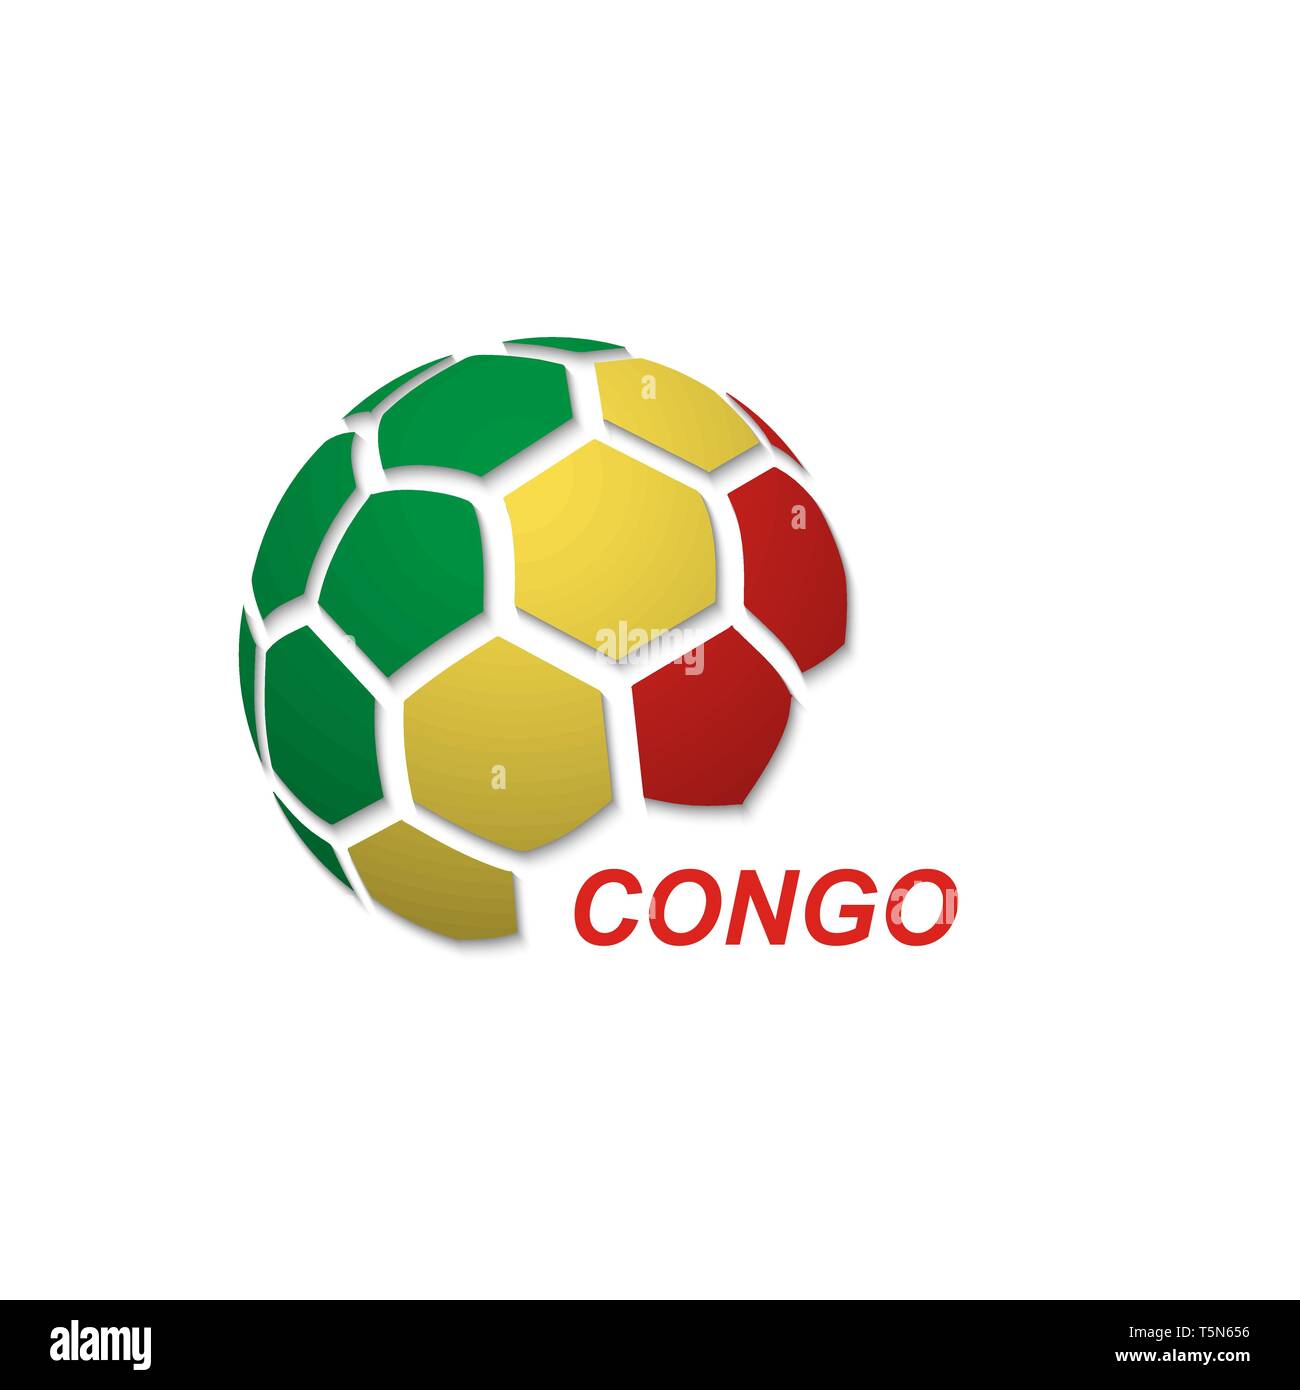 Kongo Team Stock-Vektorgrafiken kaufen - Alamy